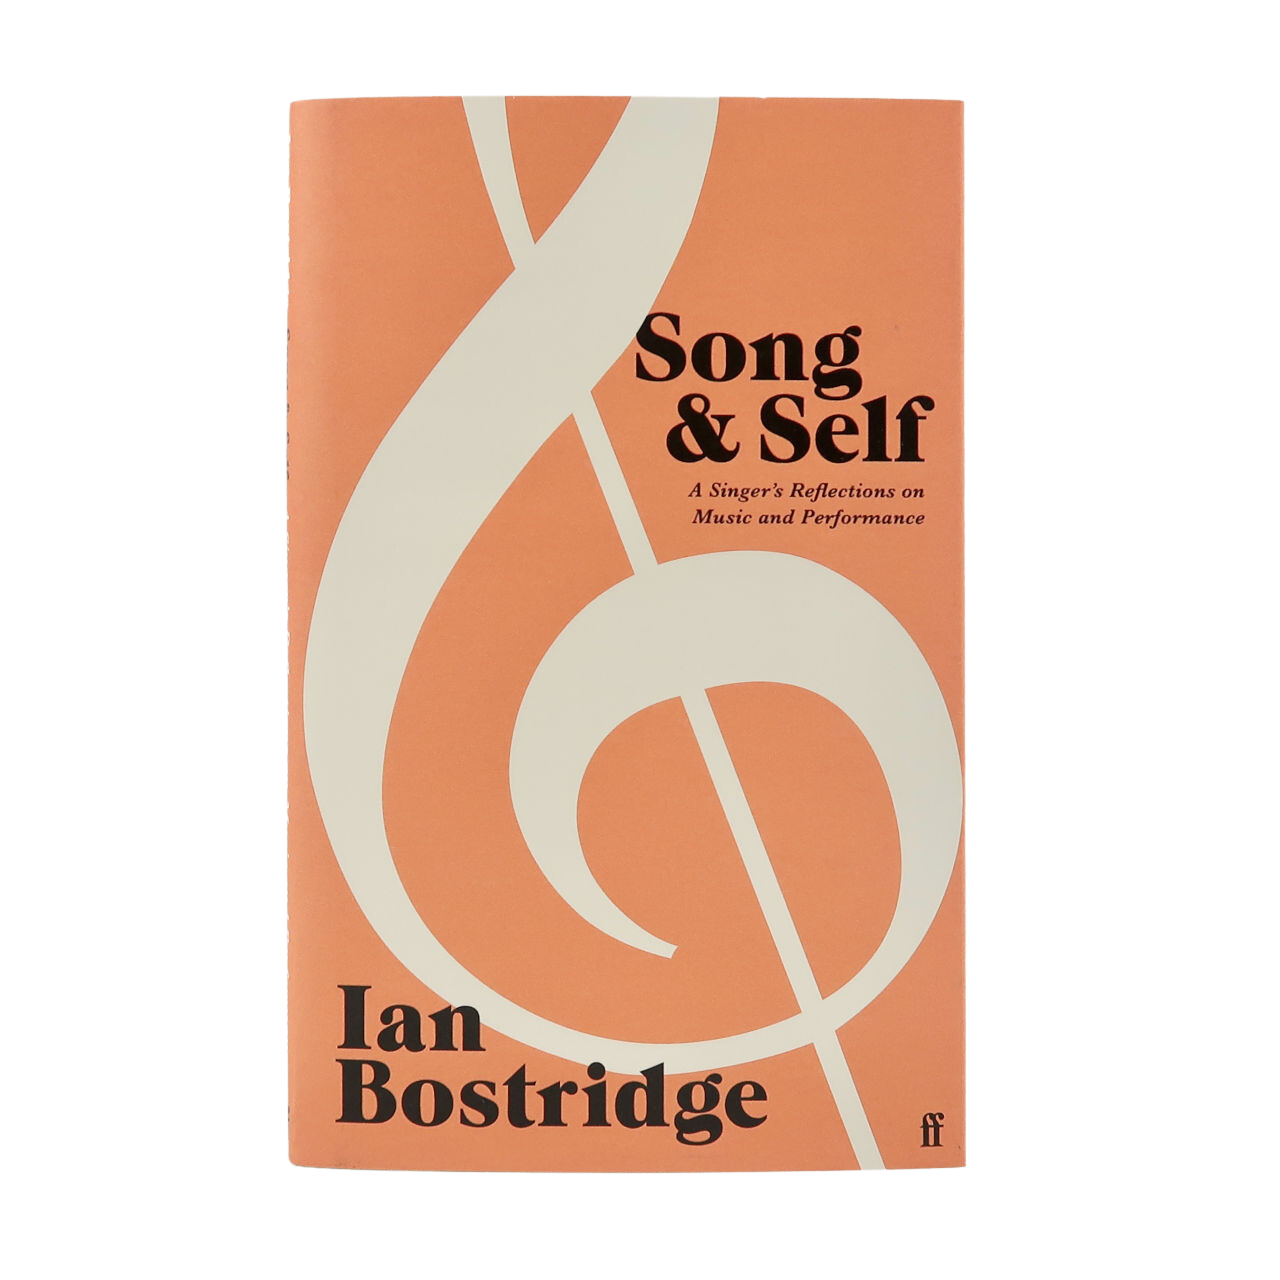 Faber & Faber Song & Self - Ian Bostridge